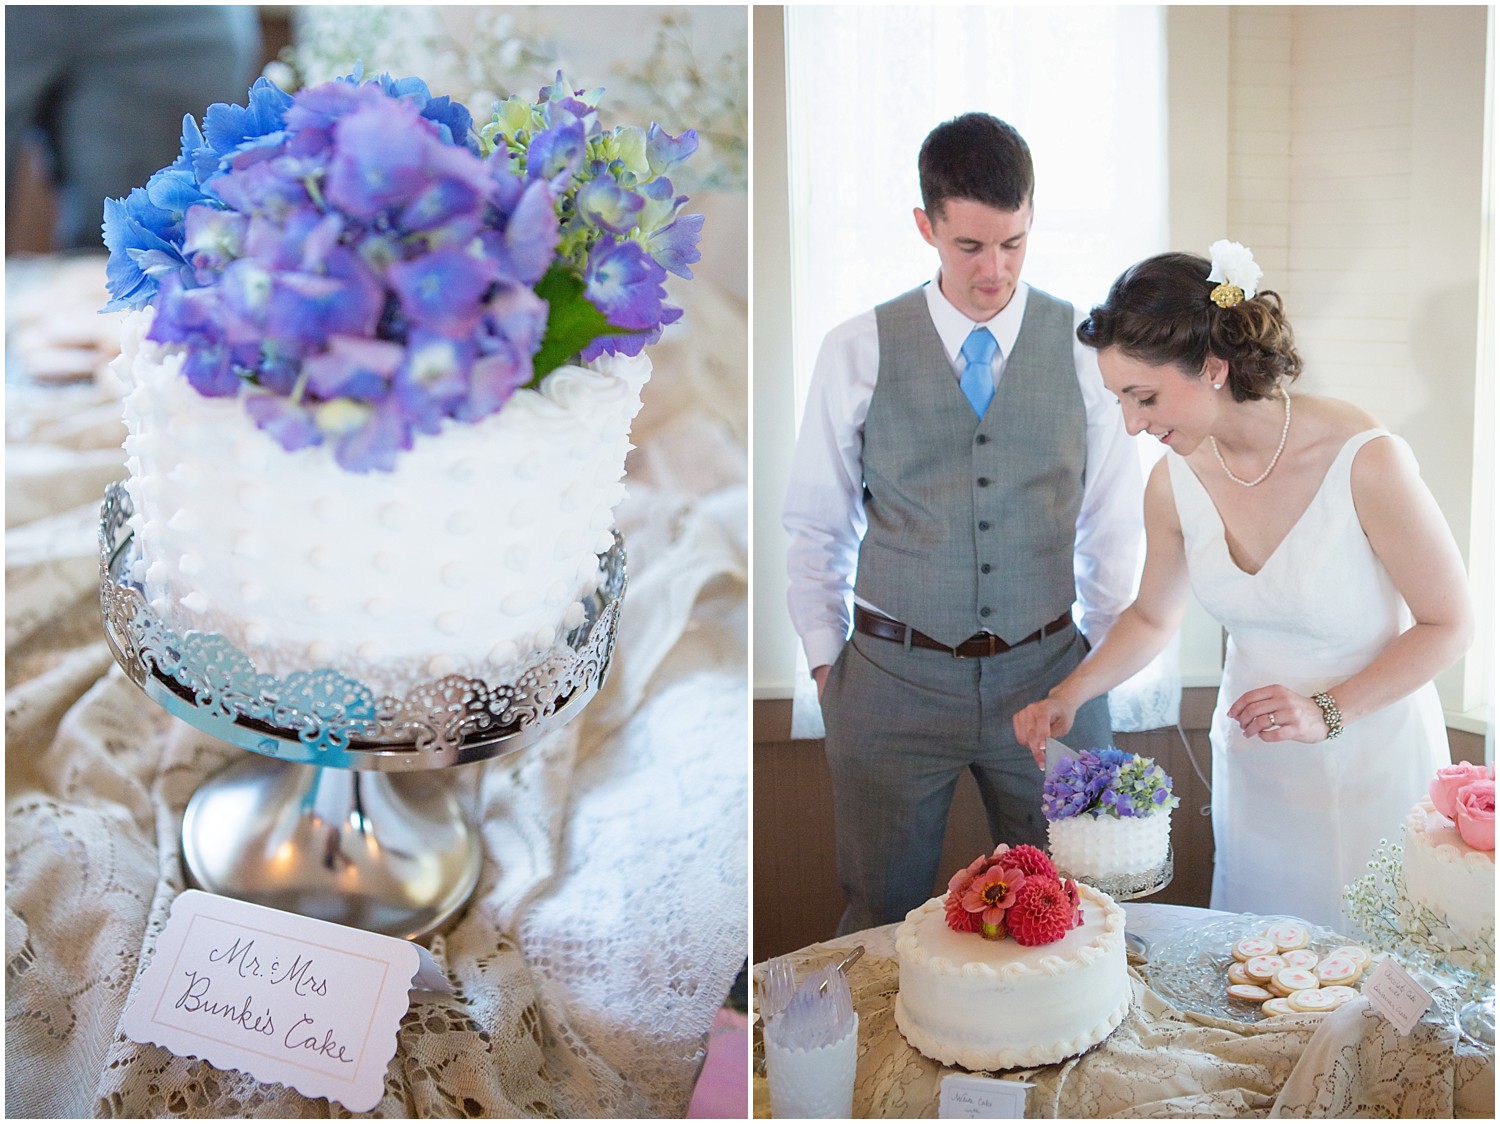 Cake cutting | Blanchard Chapel | Bow Wedding Photography | Jamie V Photography